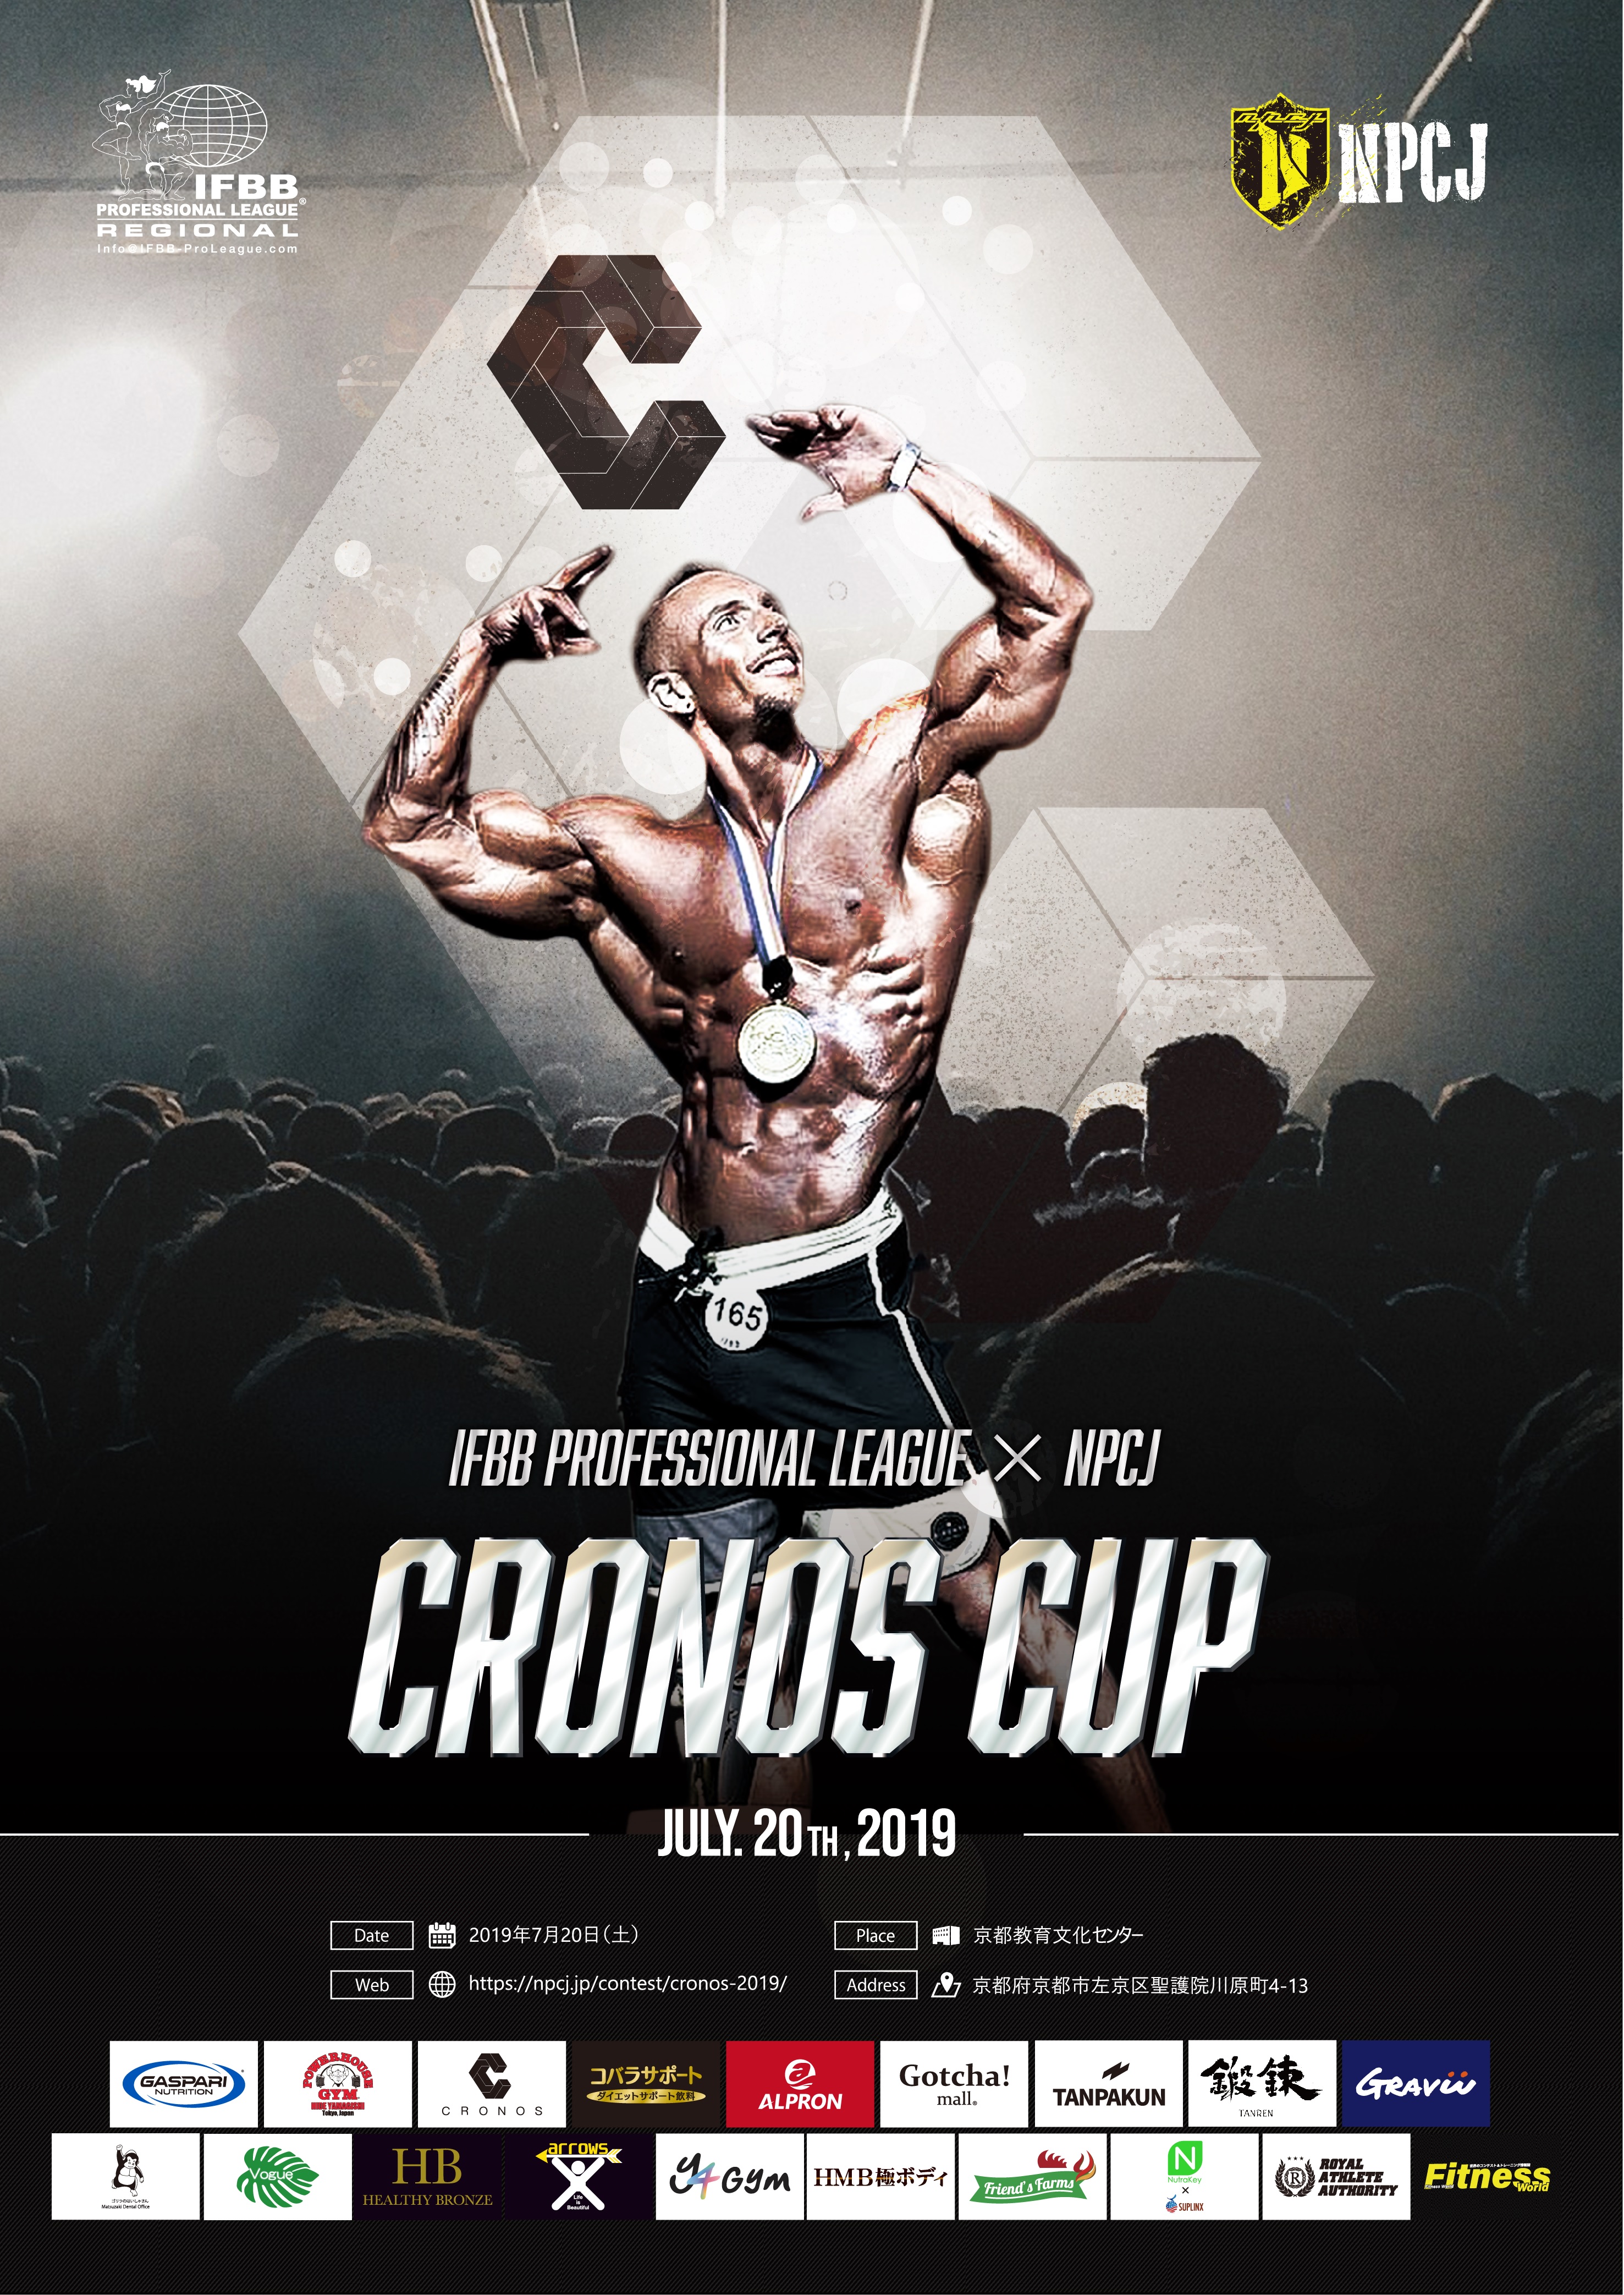 Cronos Cup 19 Fitness World Japan Fwj